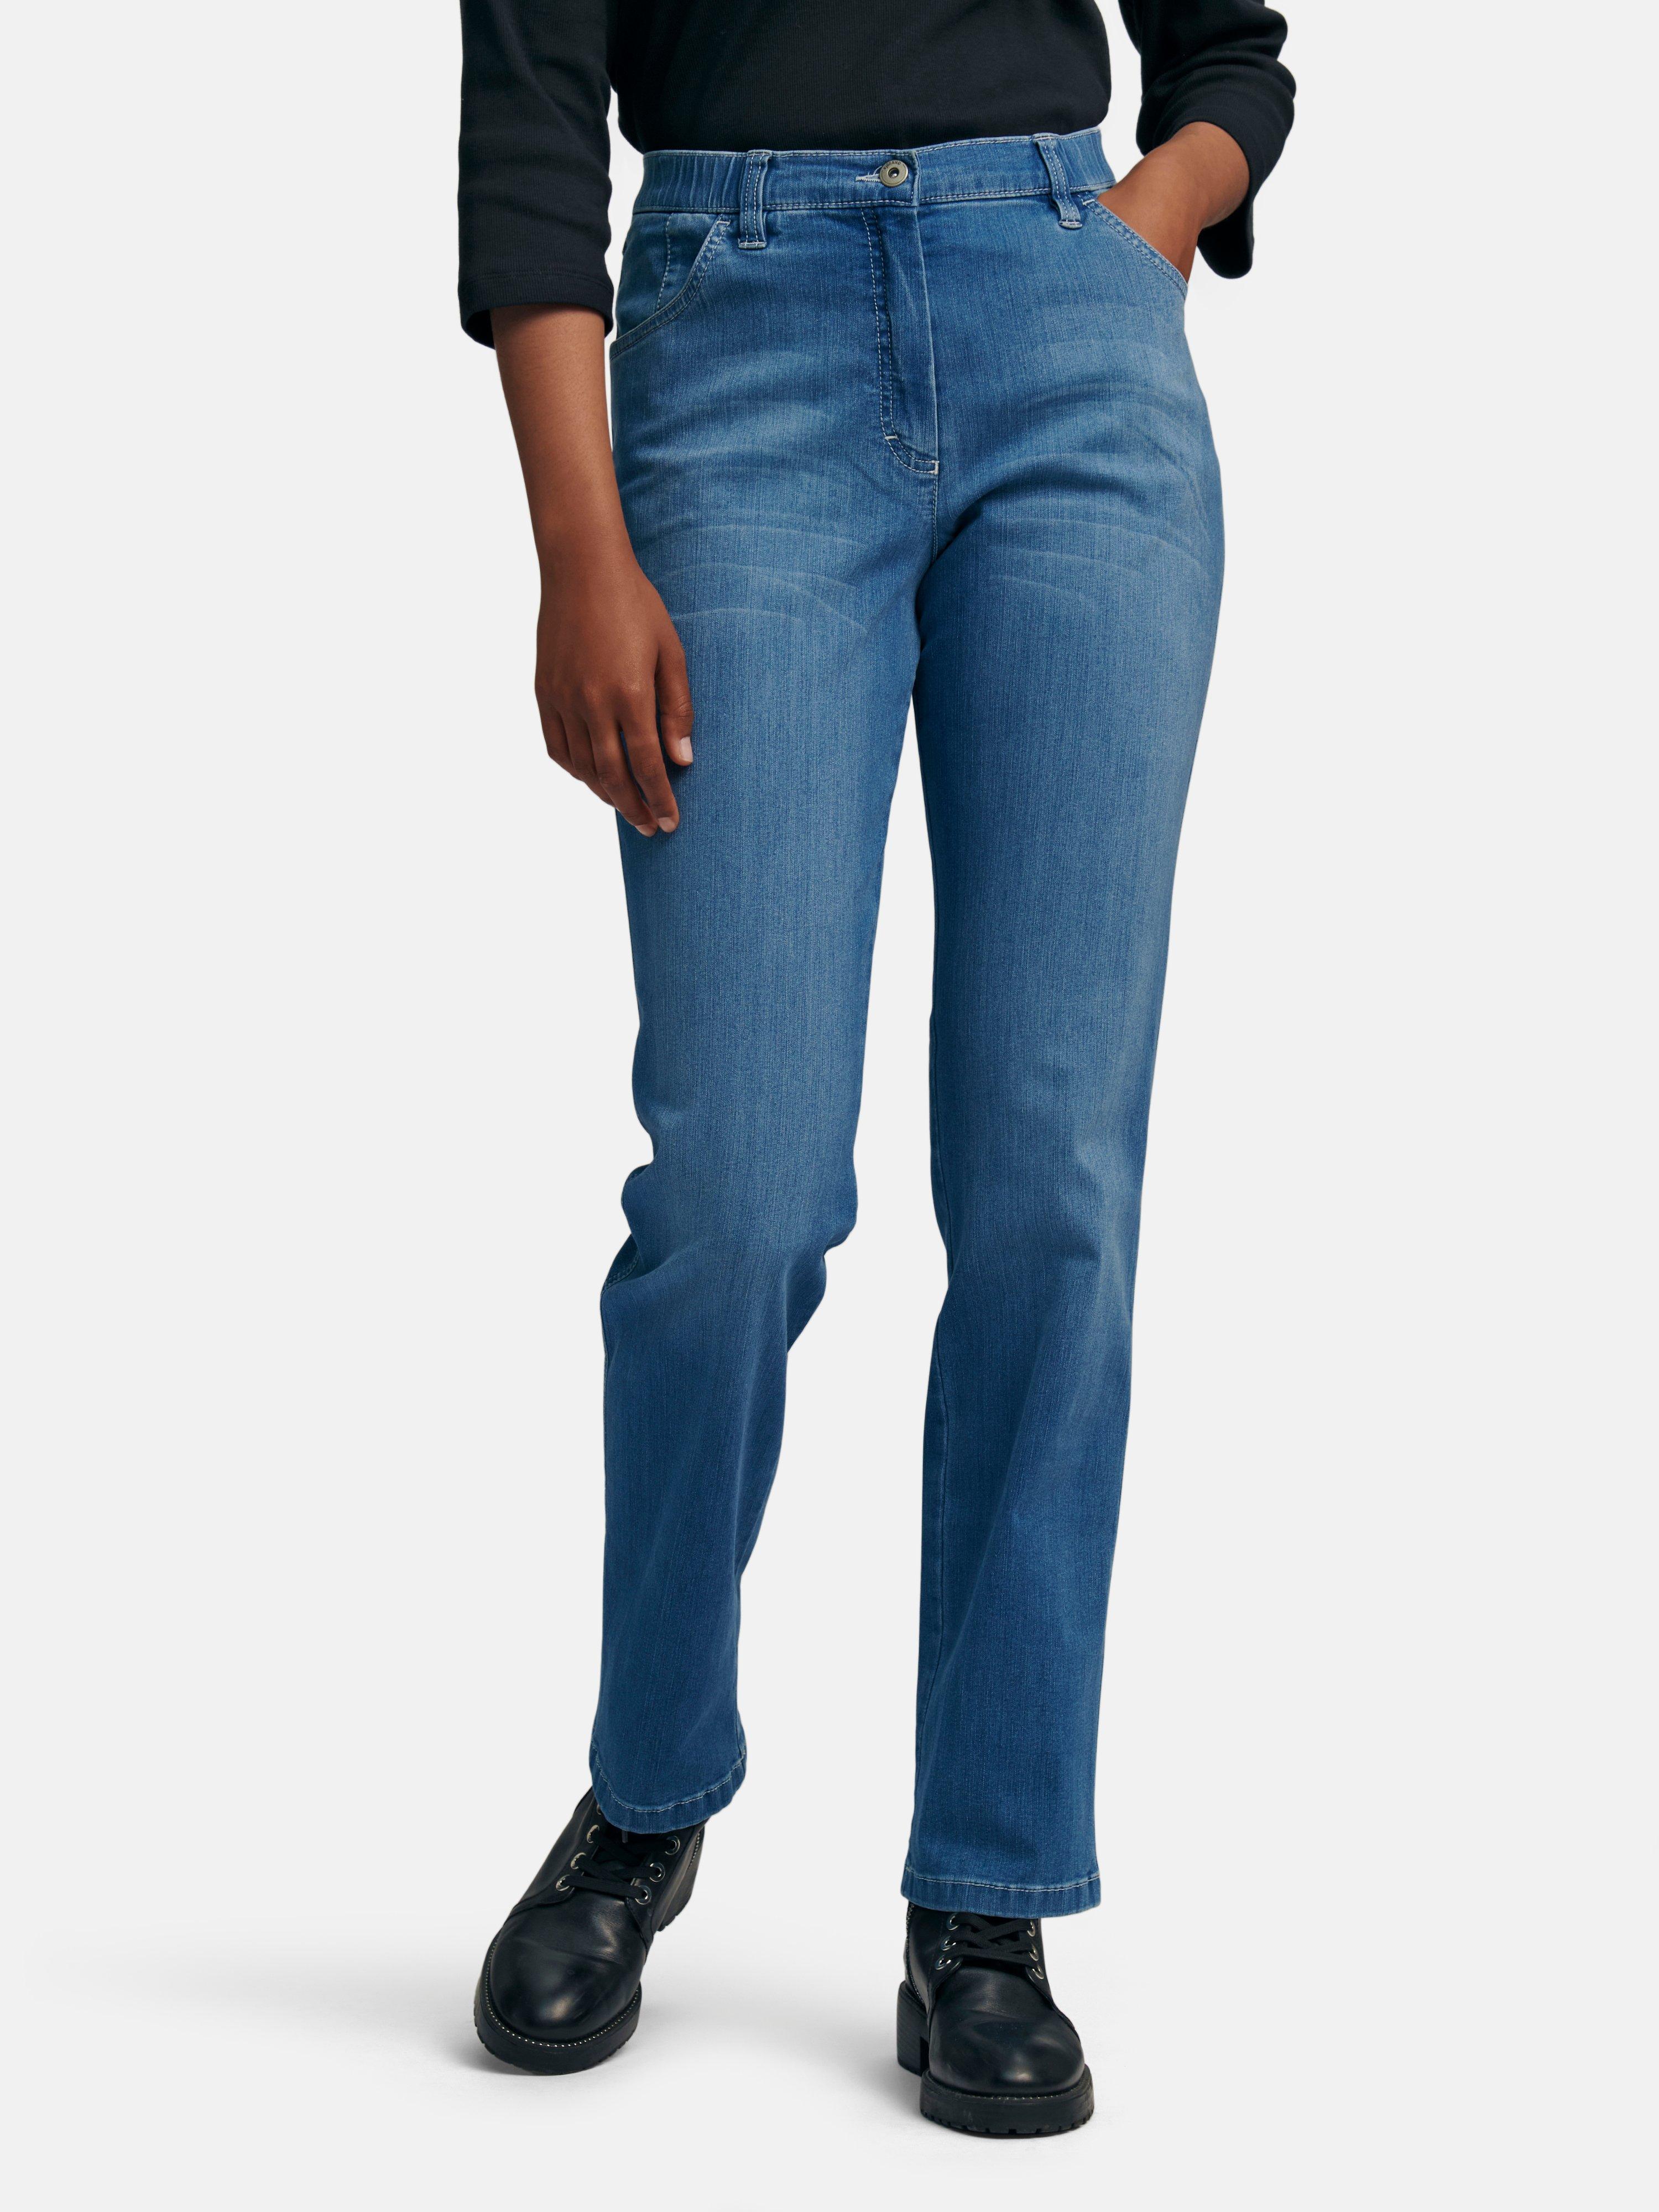 KjBrand - Jeans Modell BettyCS denim - Bleached